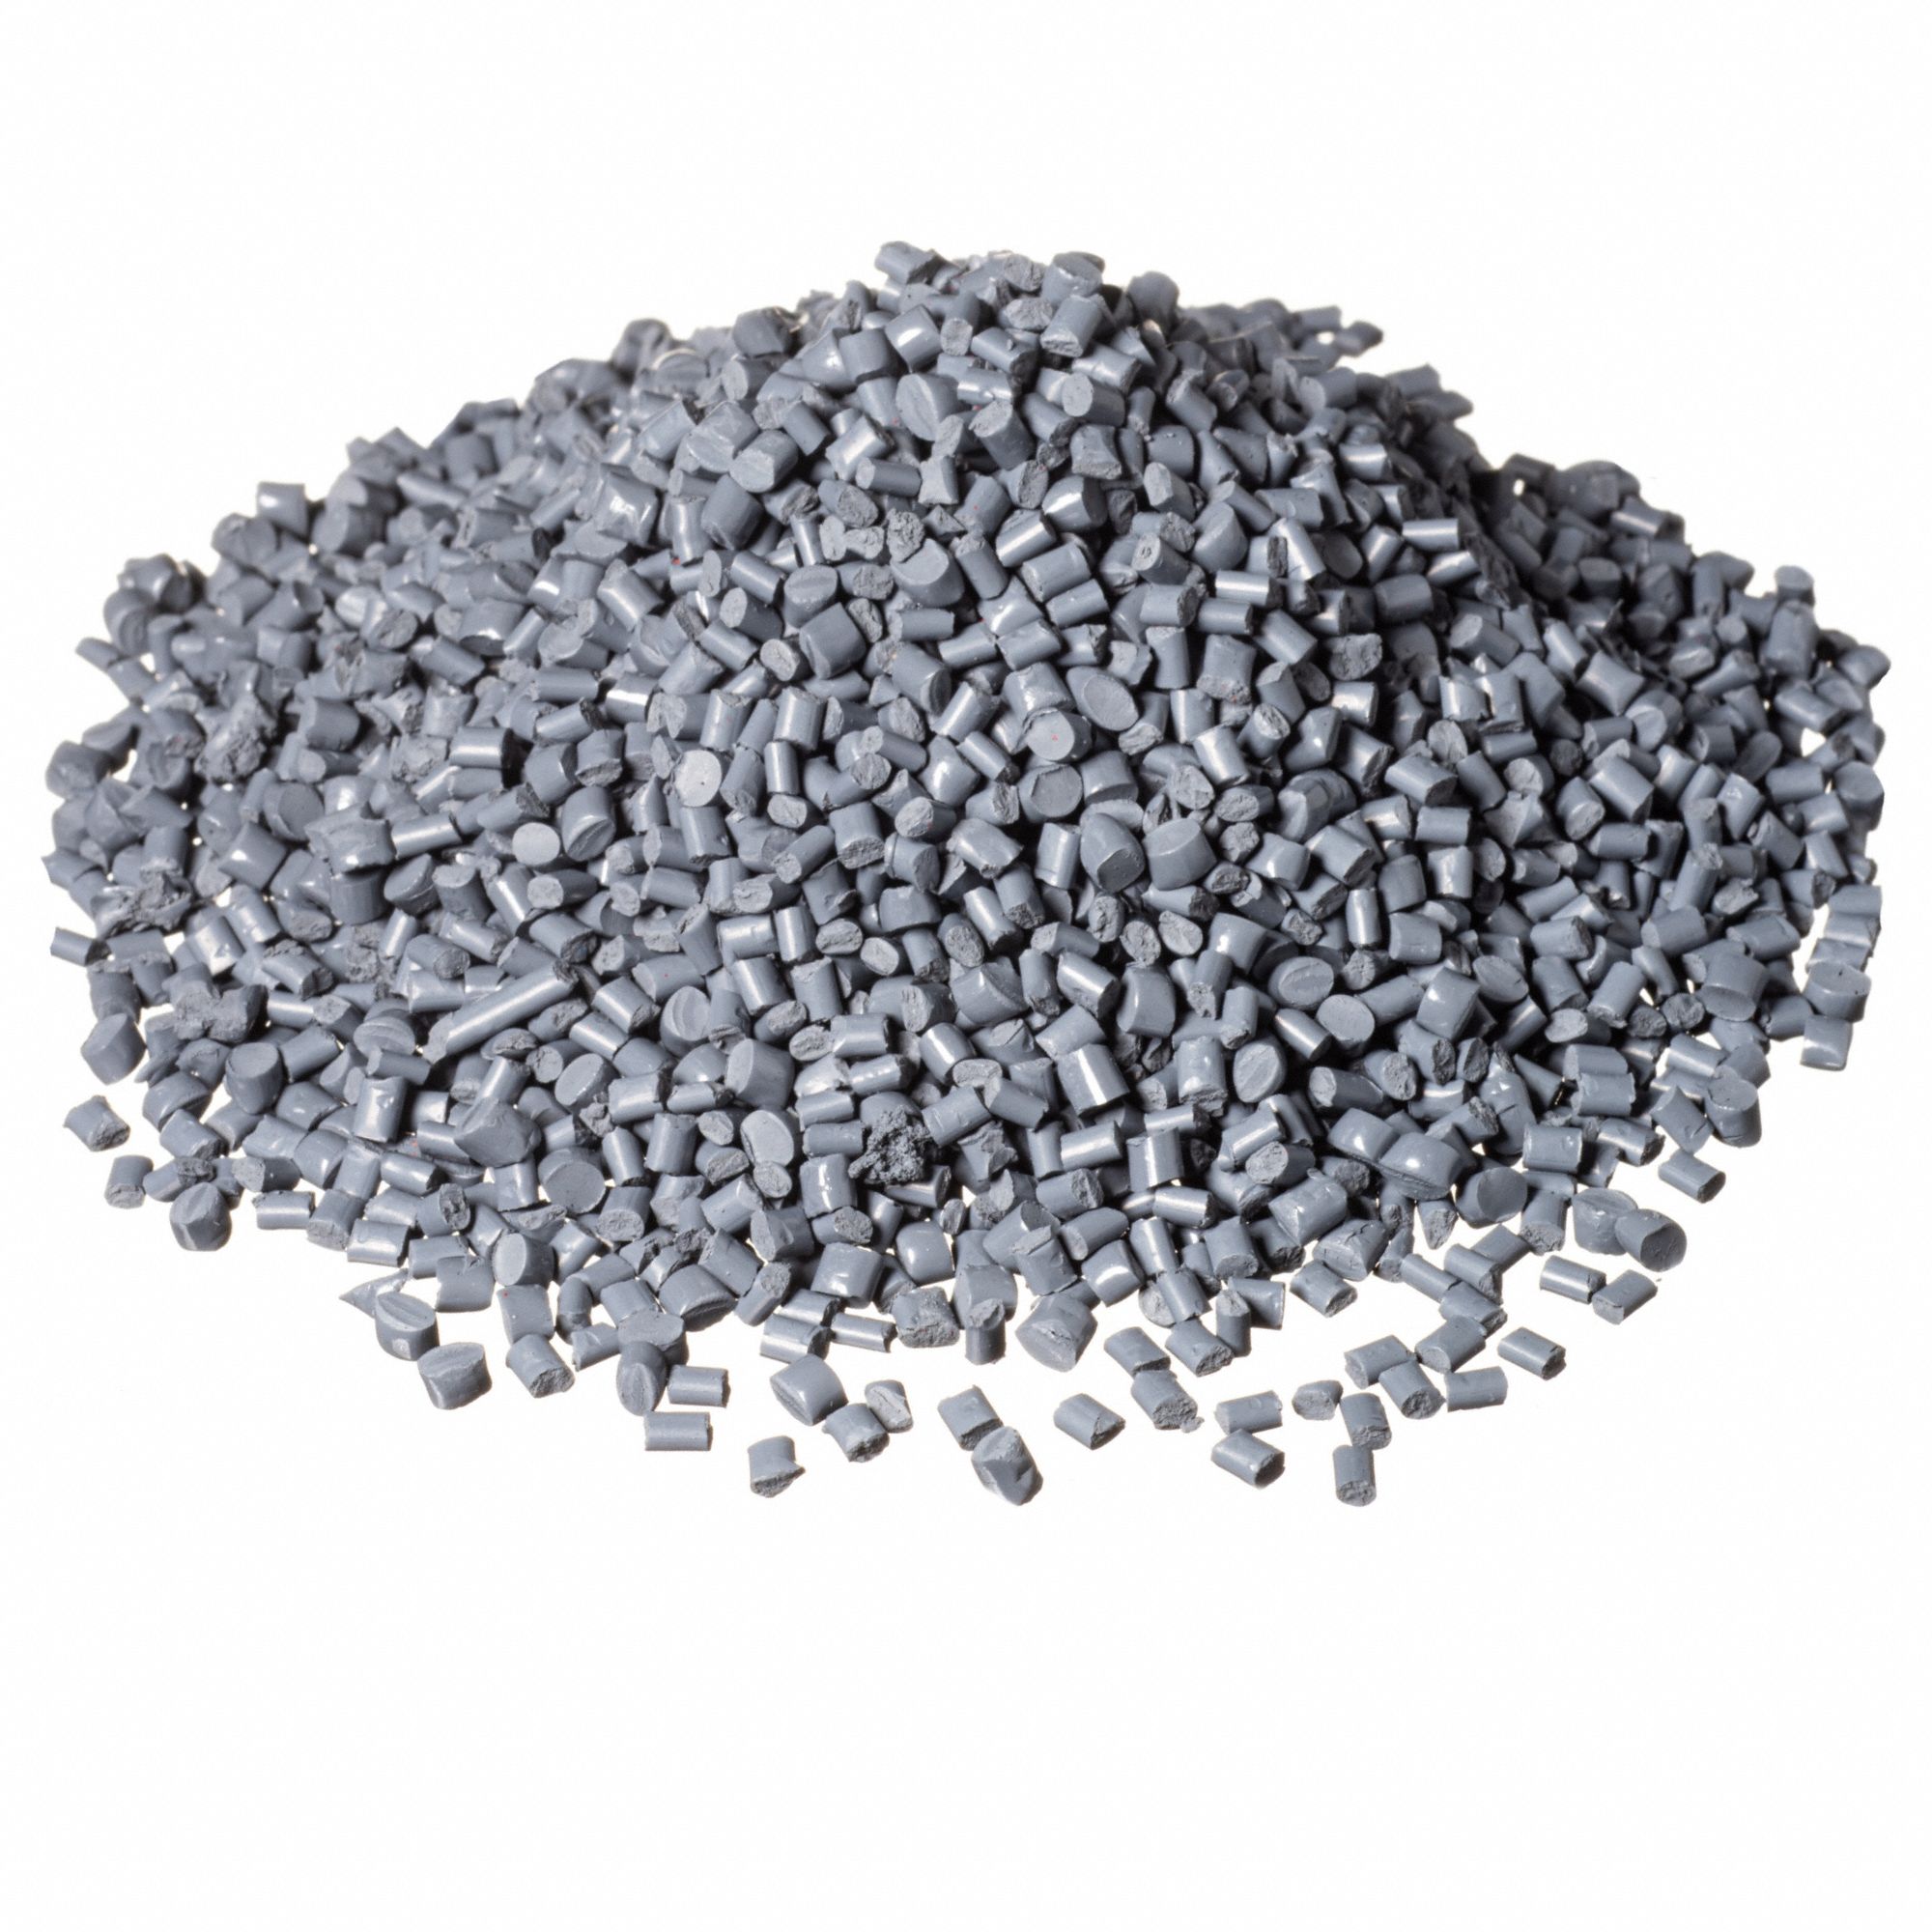 Colorant, Black PP 30%, Compatible with Polypropylene, Quantity 0.5lb/bag